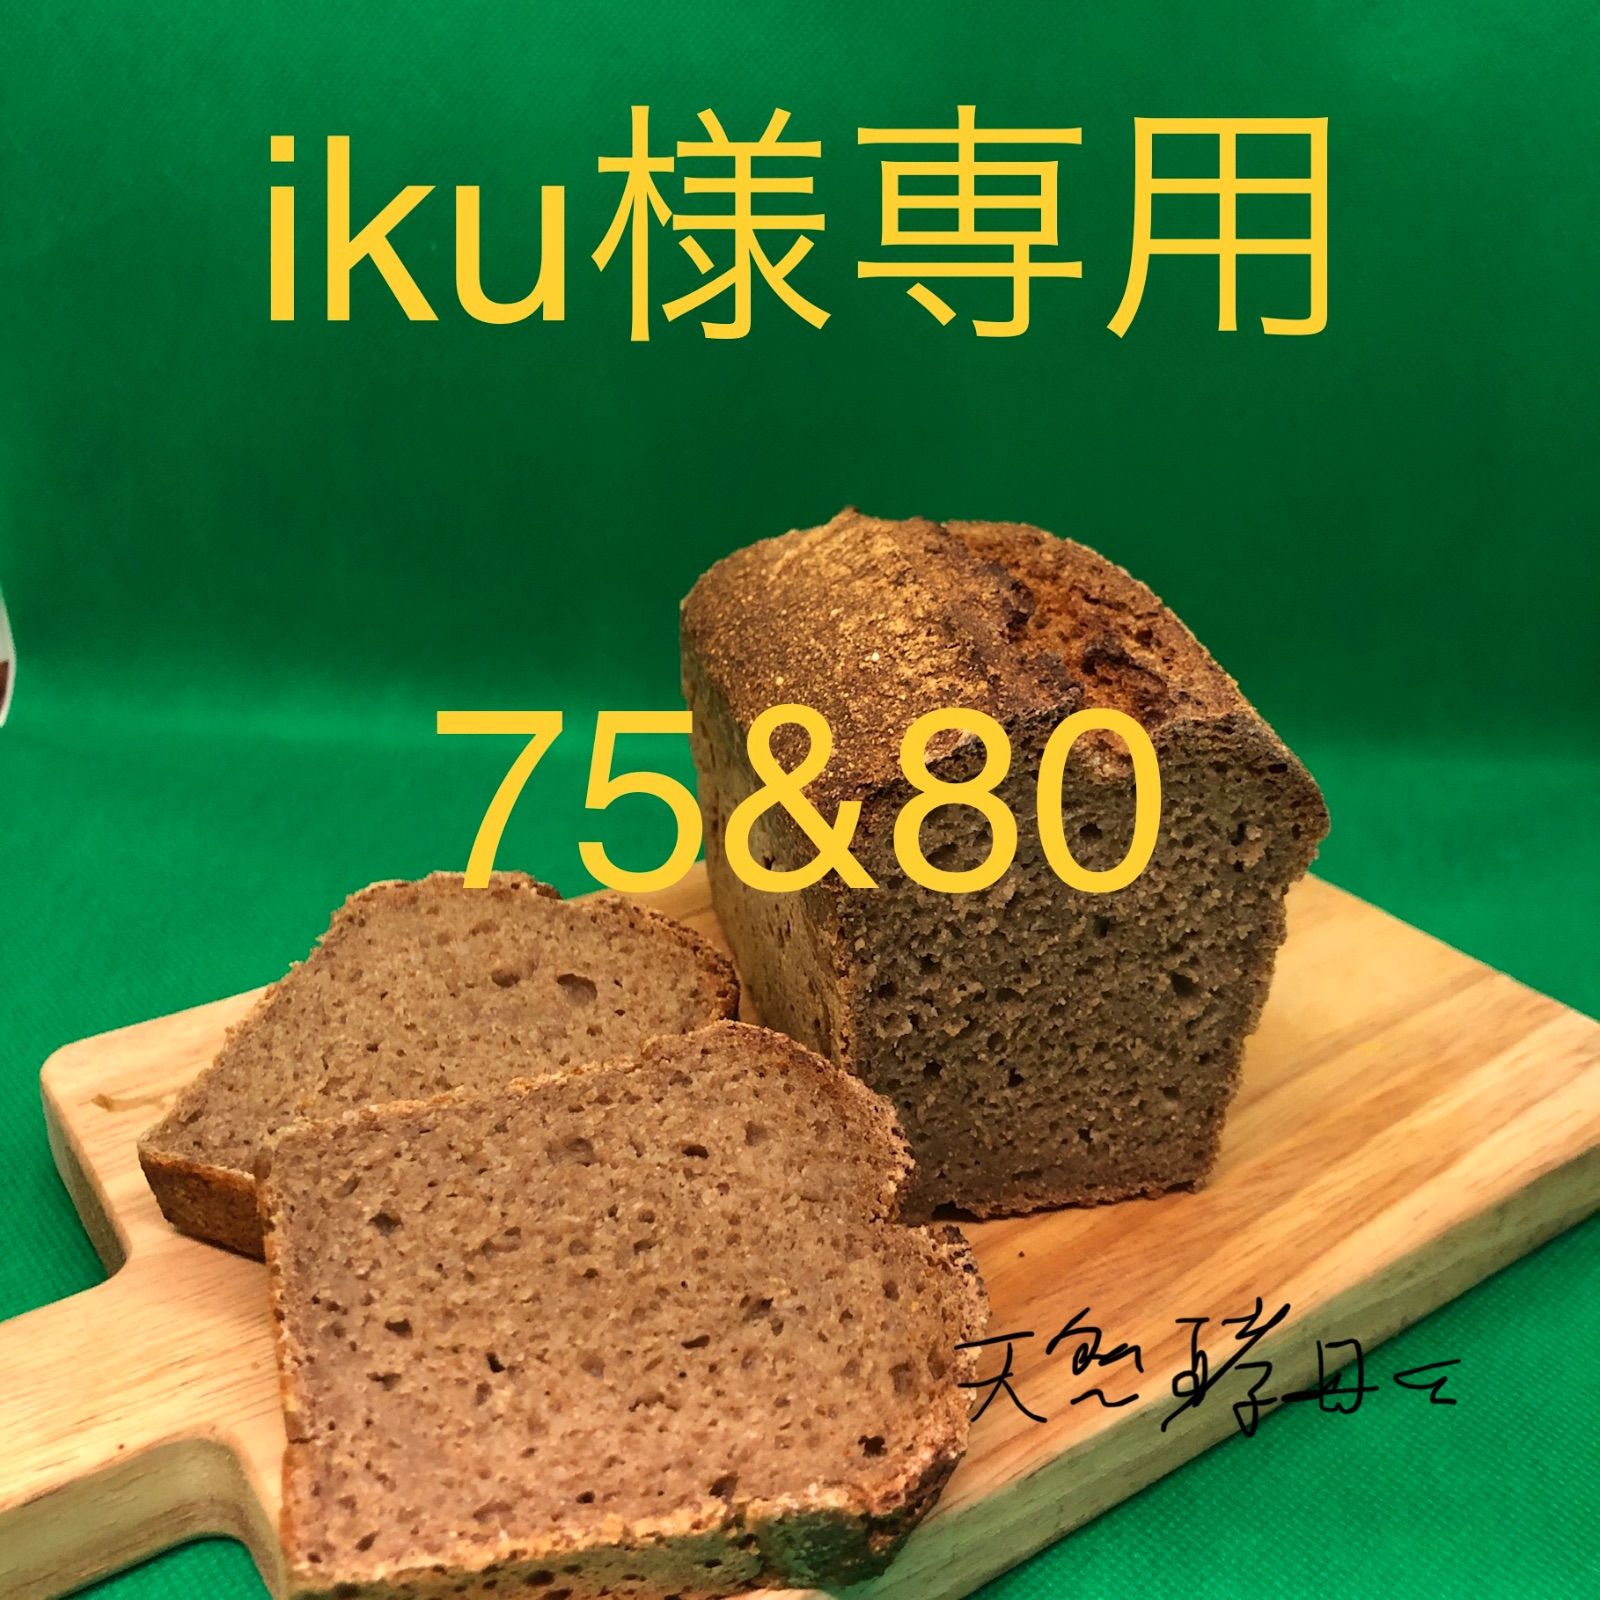 Iku様専用セット セーグル80&75 - 天然酵母くん - メルカリ